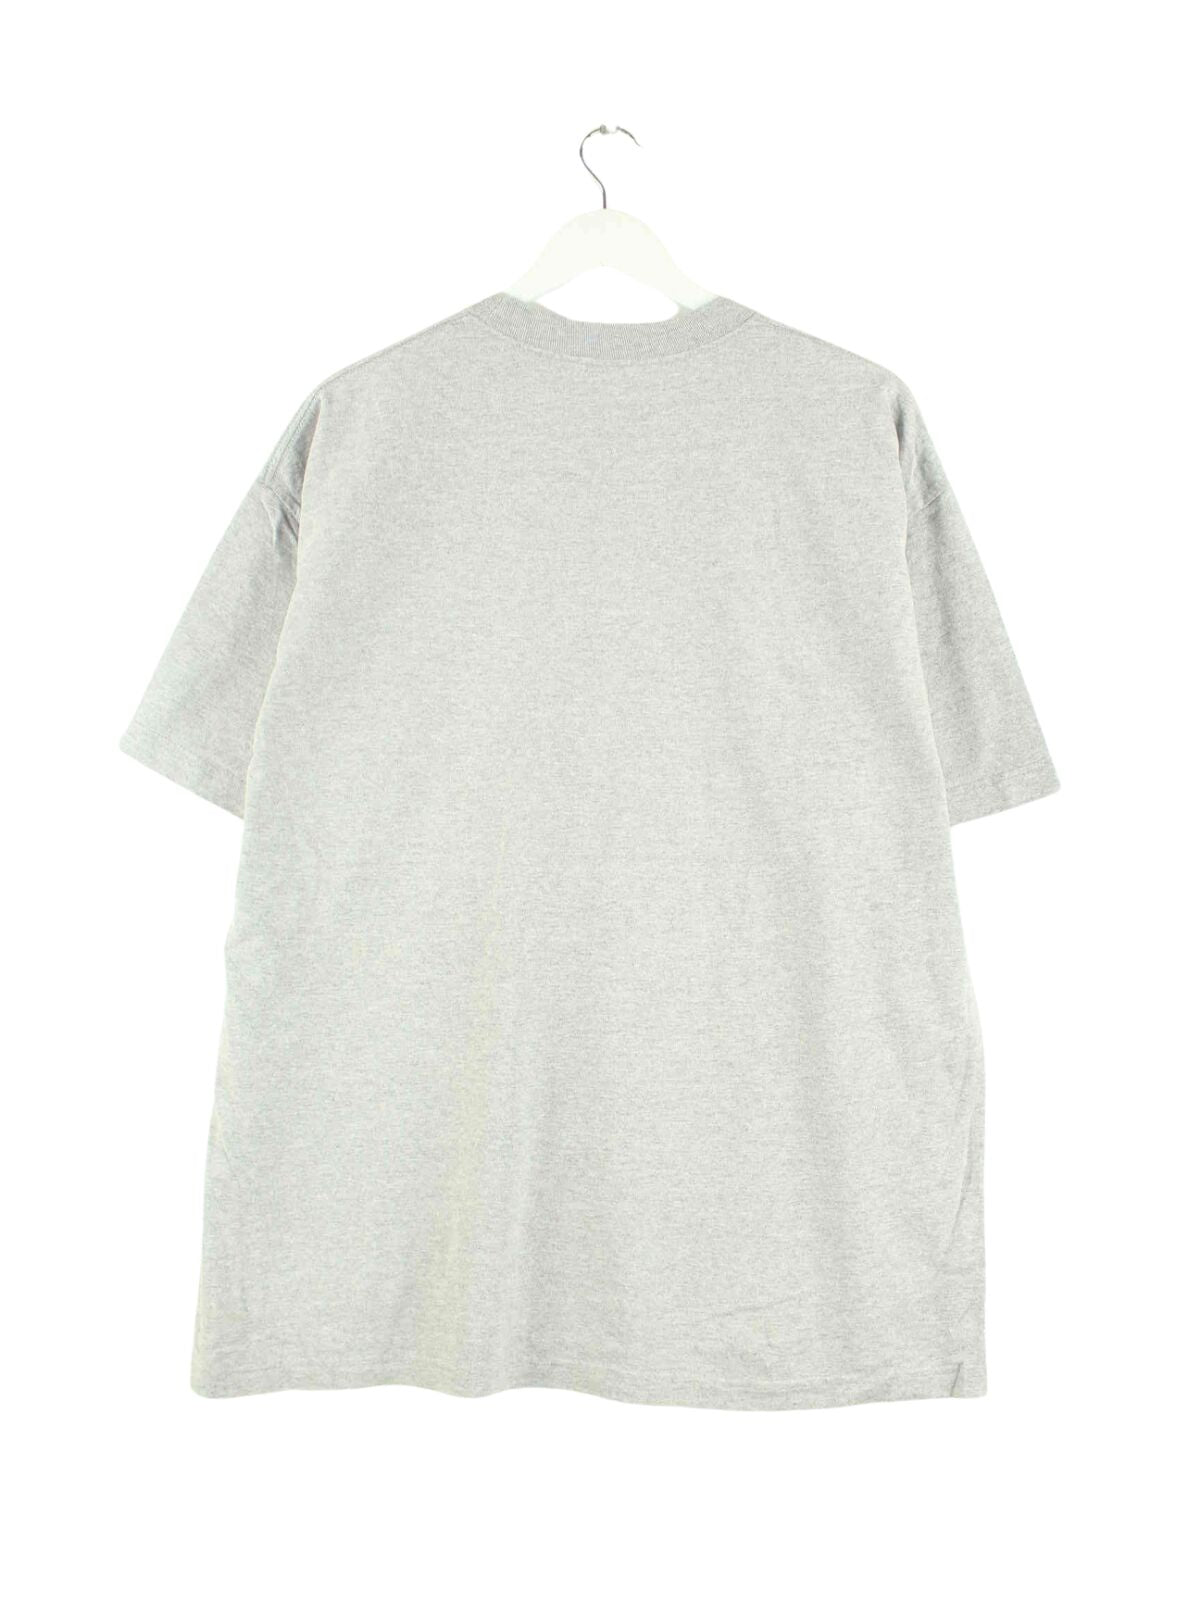 Nike Spellout Print T-Shirt Grau XL (back image)